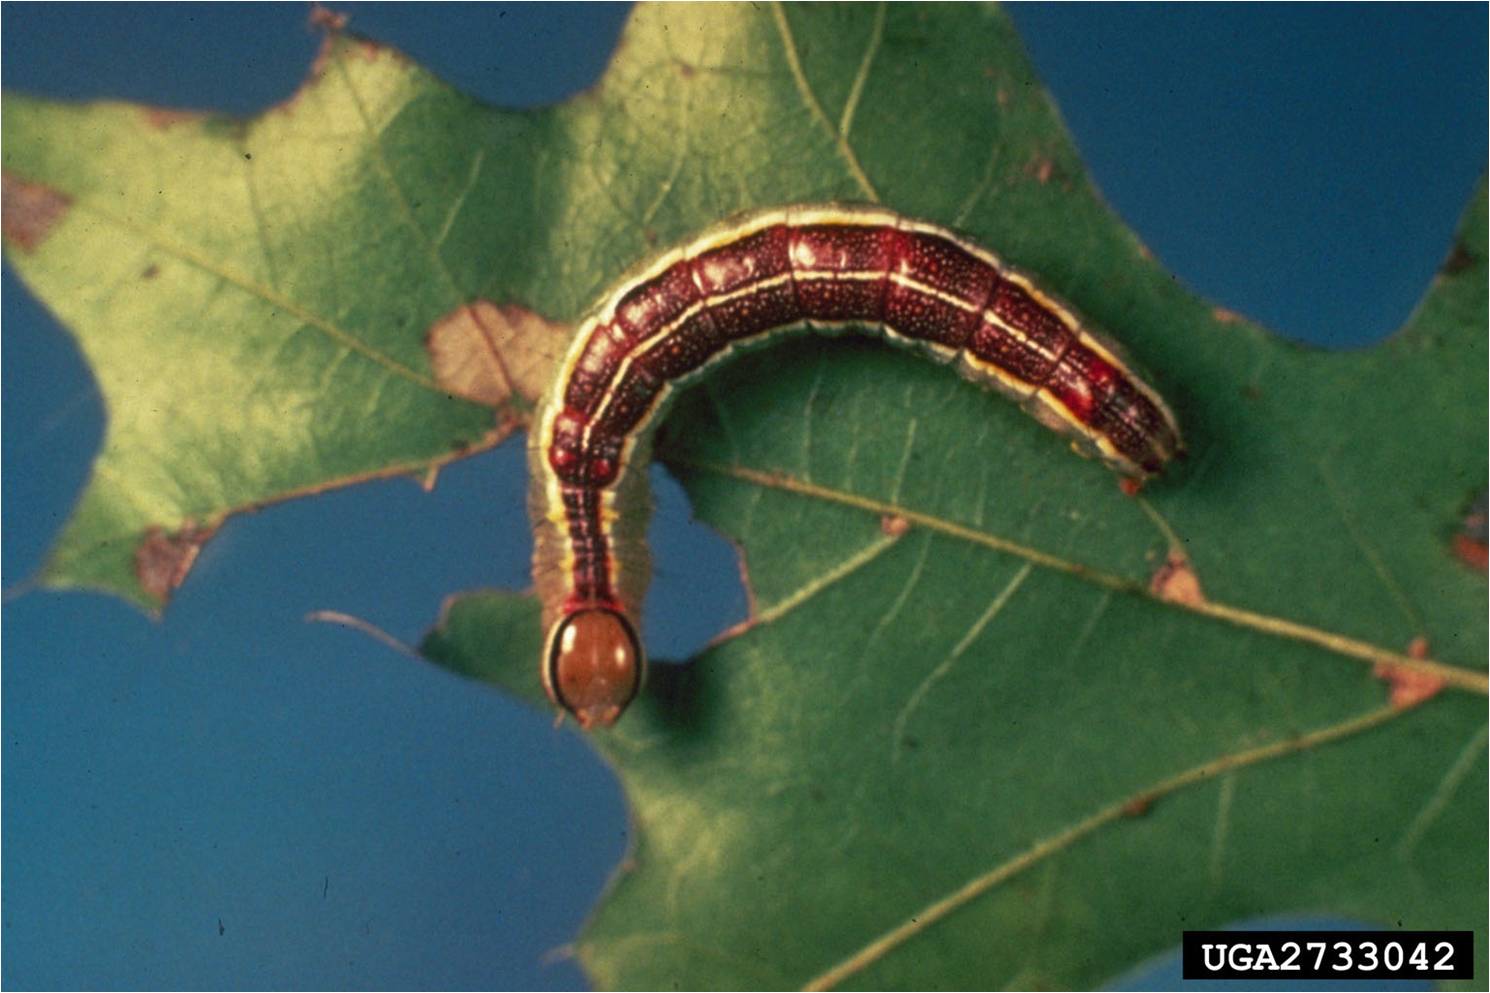 close up image of a caterpillar on an oak leaf